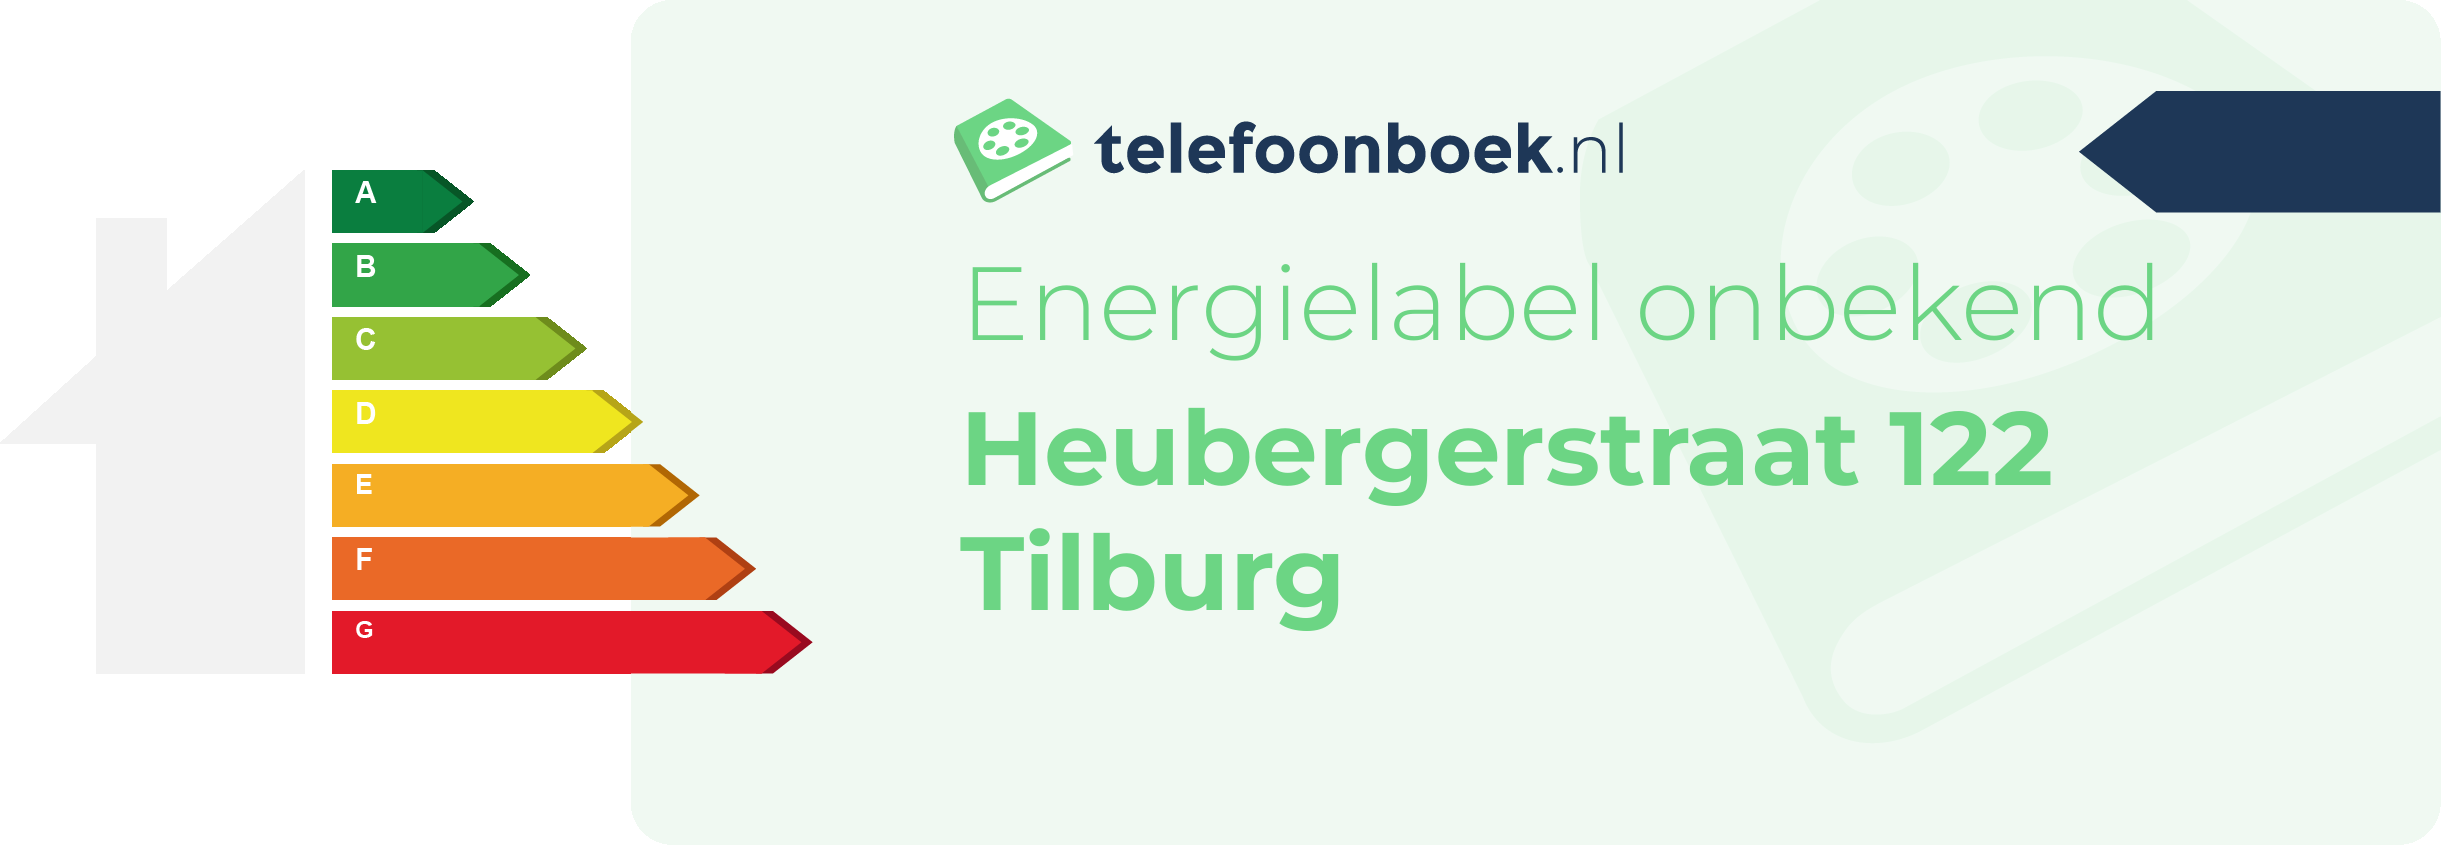 Energielabel Heubergerstraat 122 Tilburg